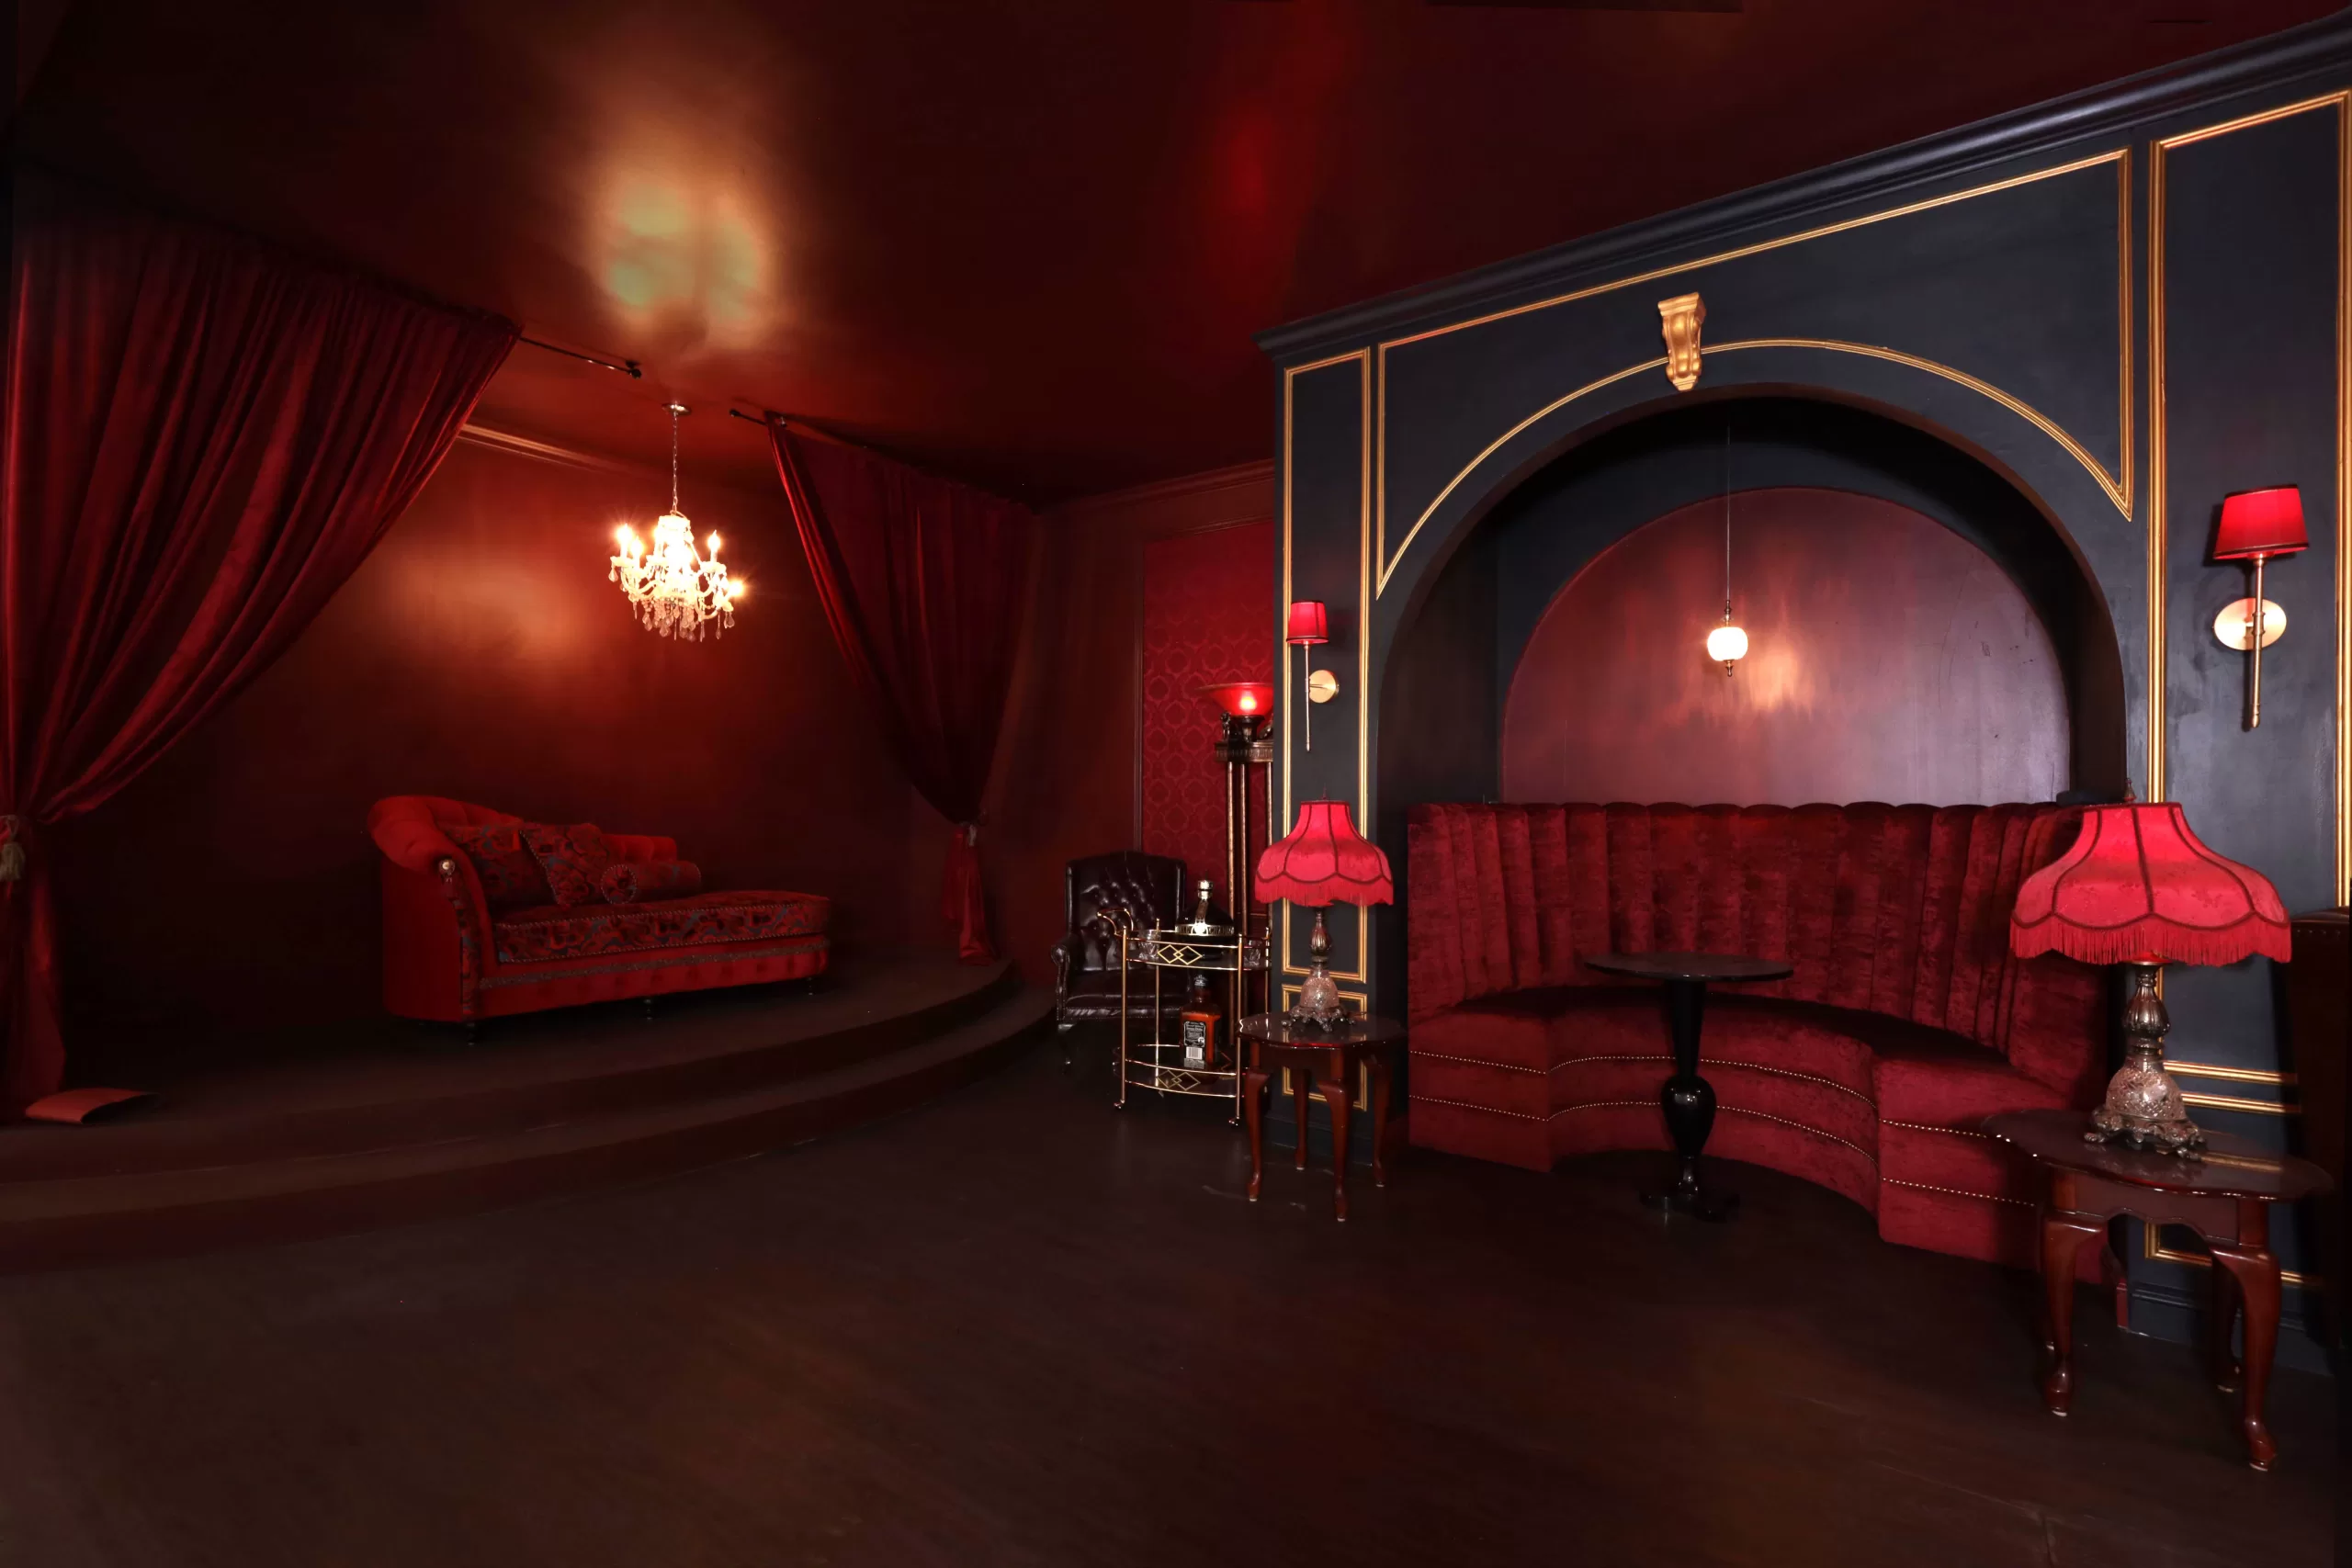 The Lounge at the Los Gatos Cigar Club